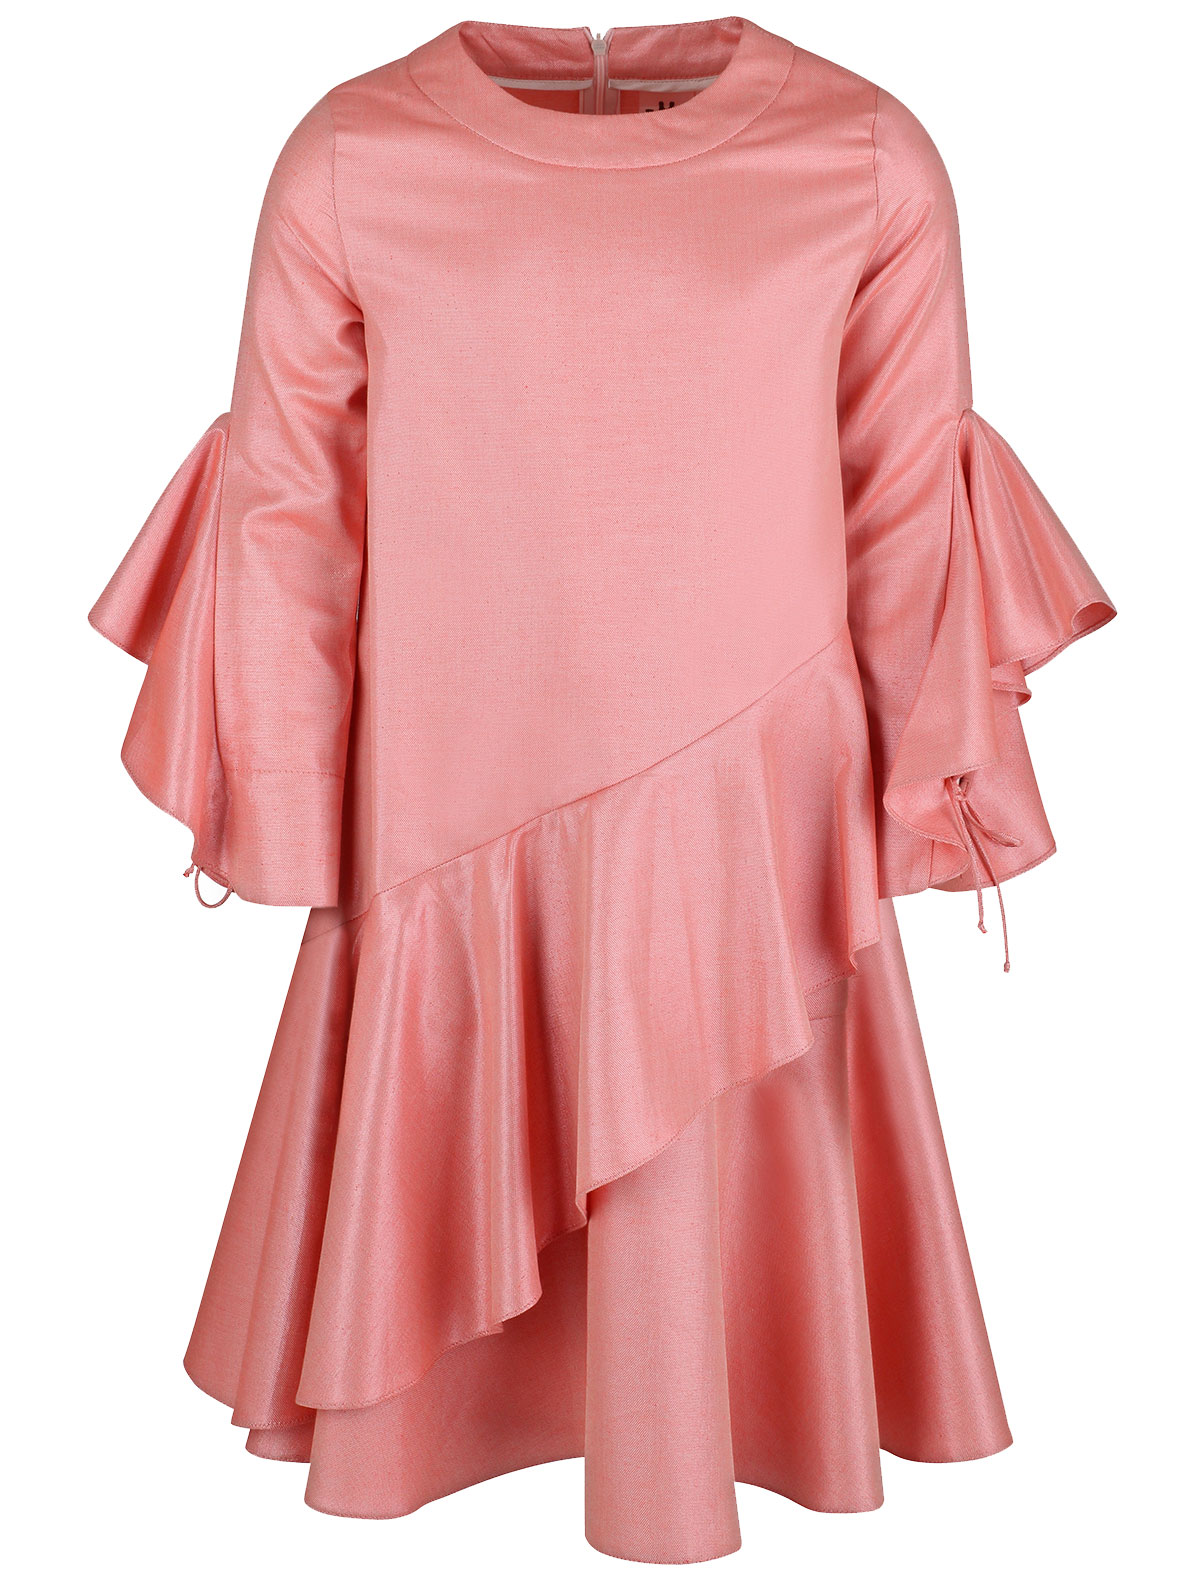 Платье TVVIIGA розового цвета